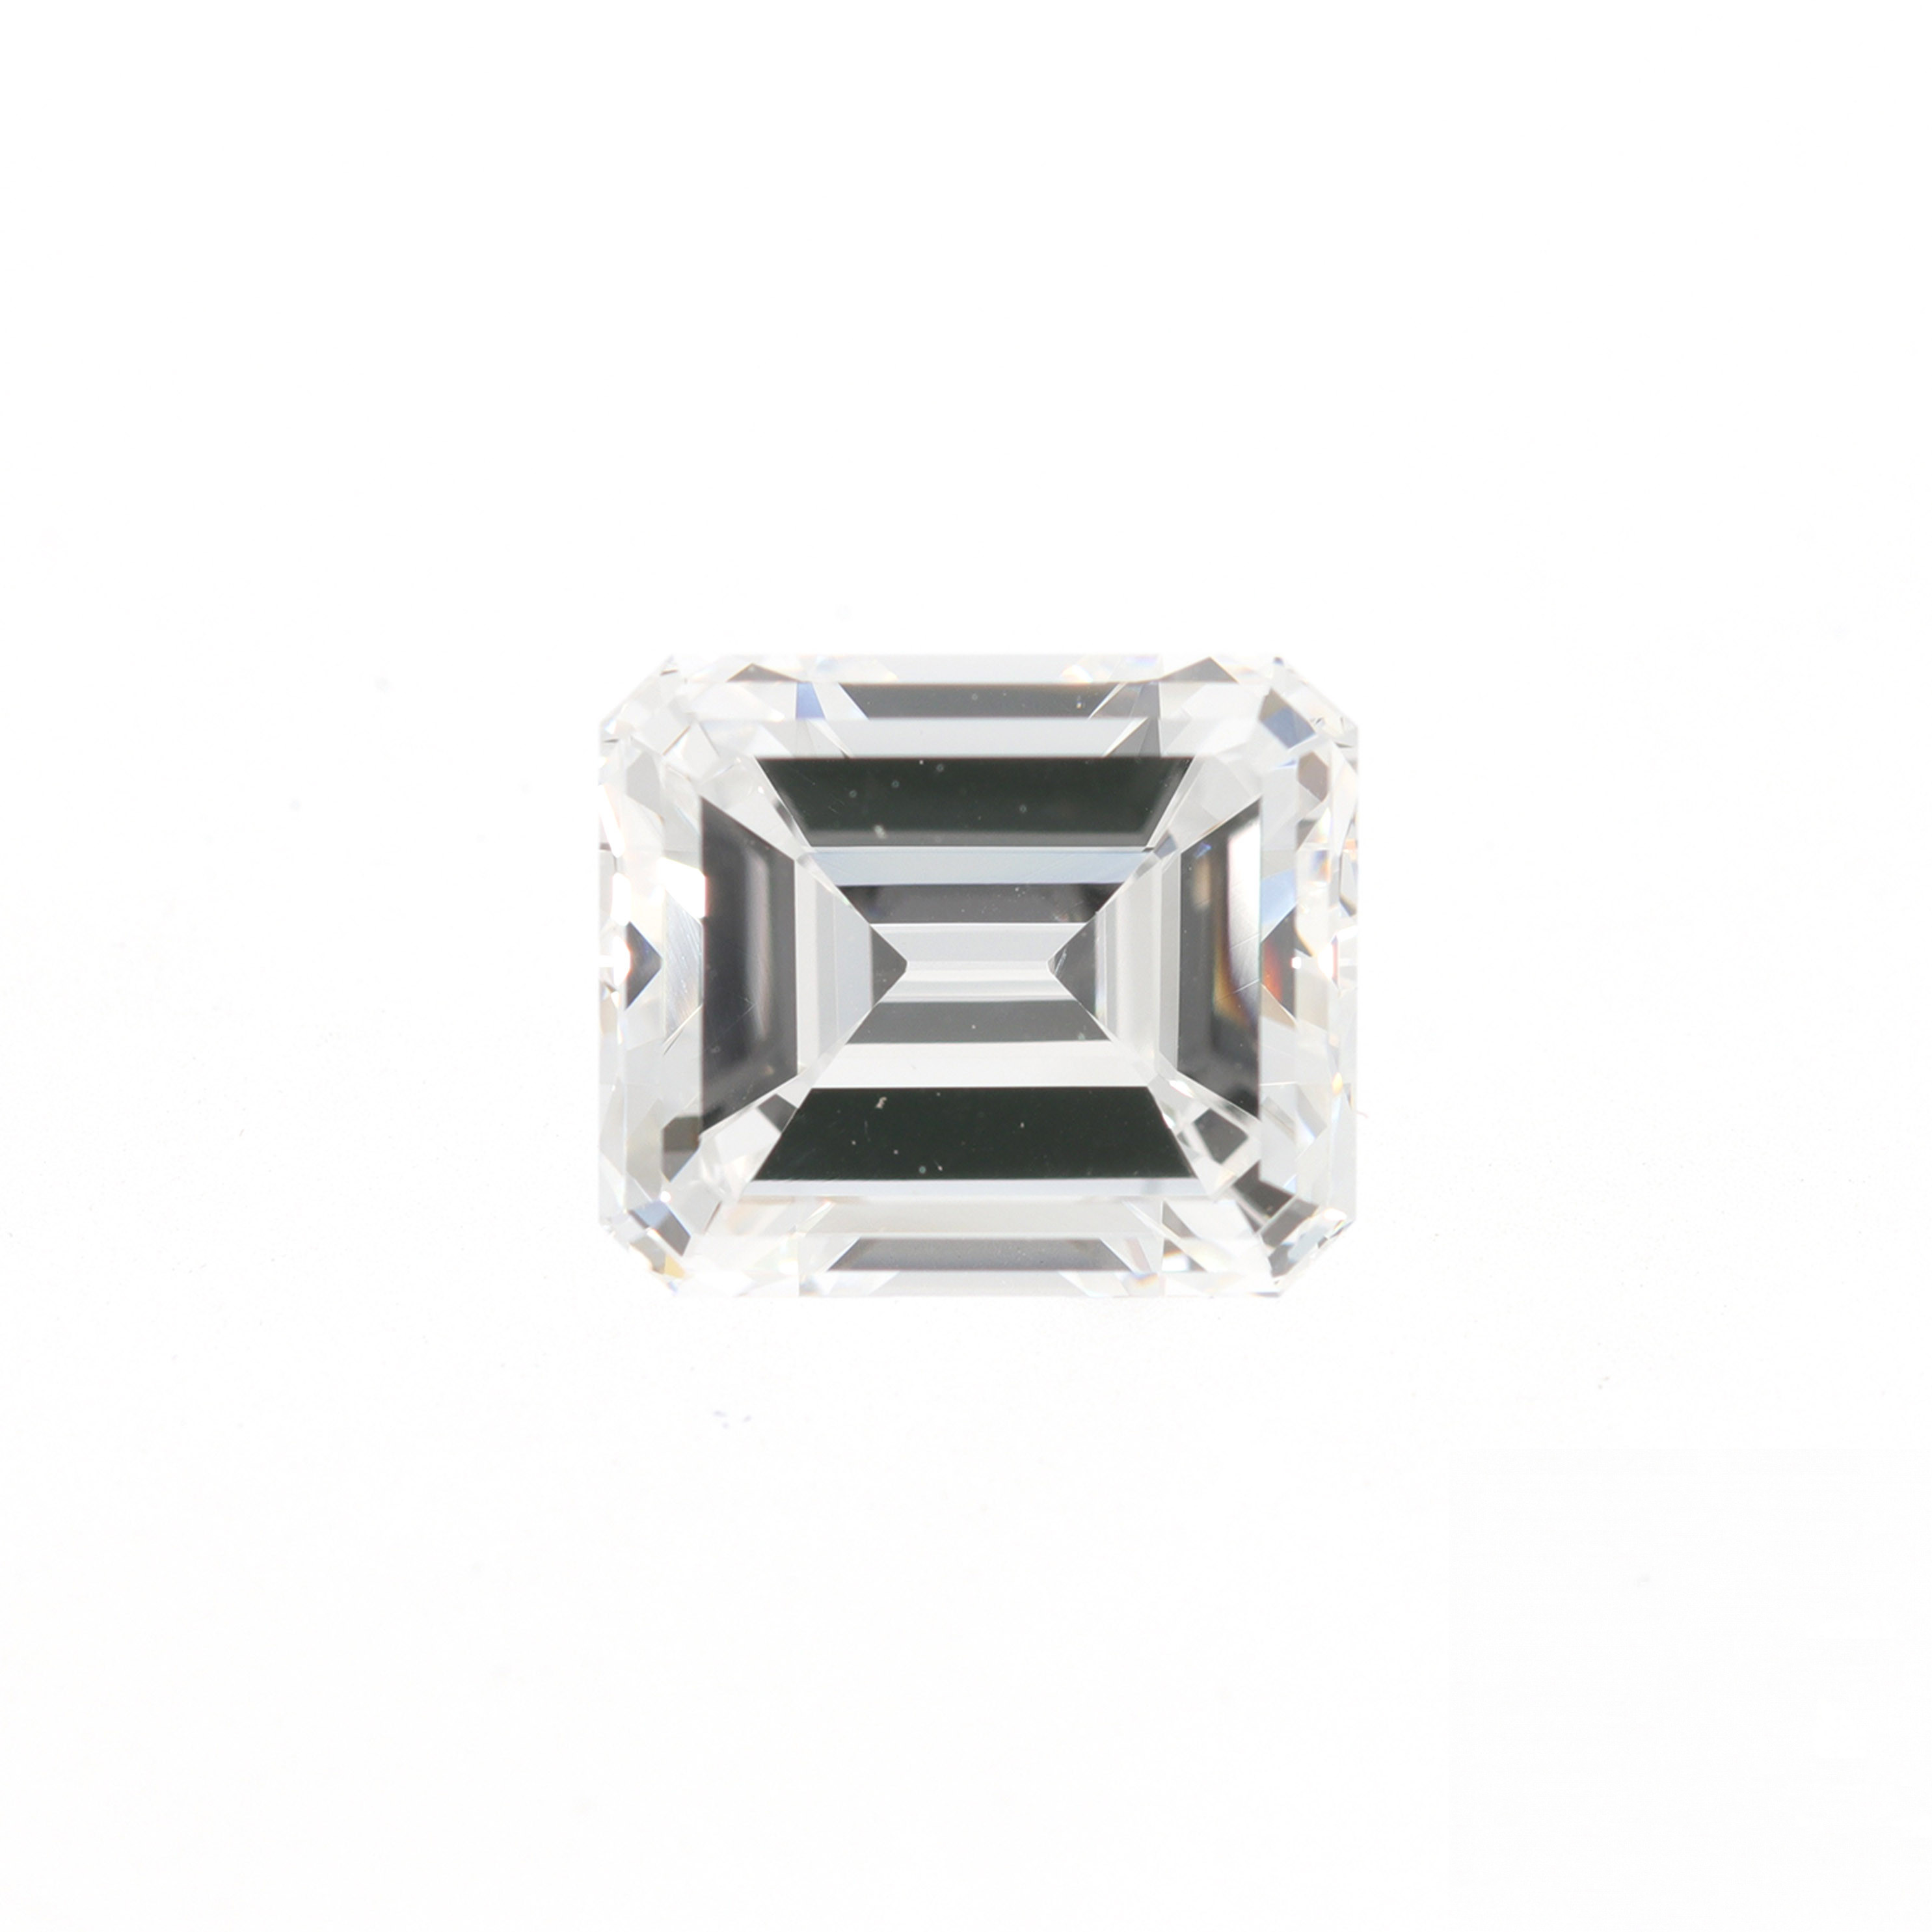 a loose diamond to exemplify carat